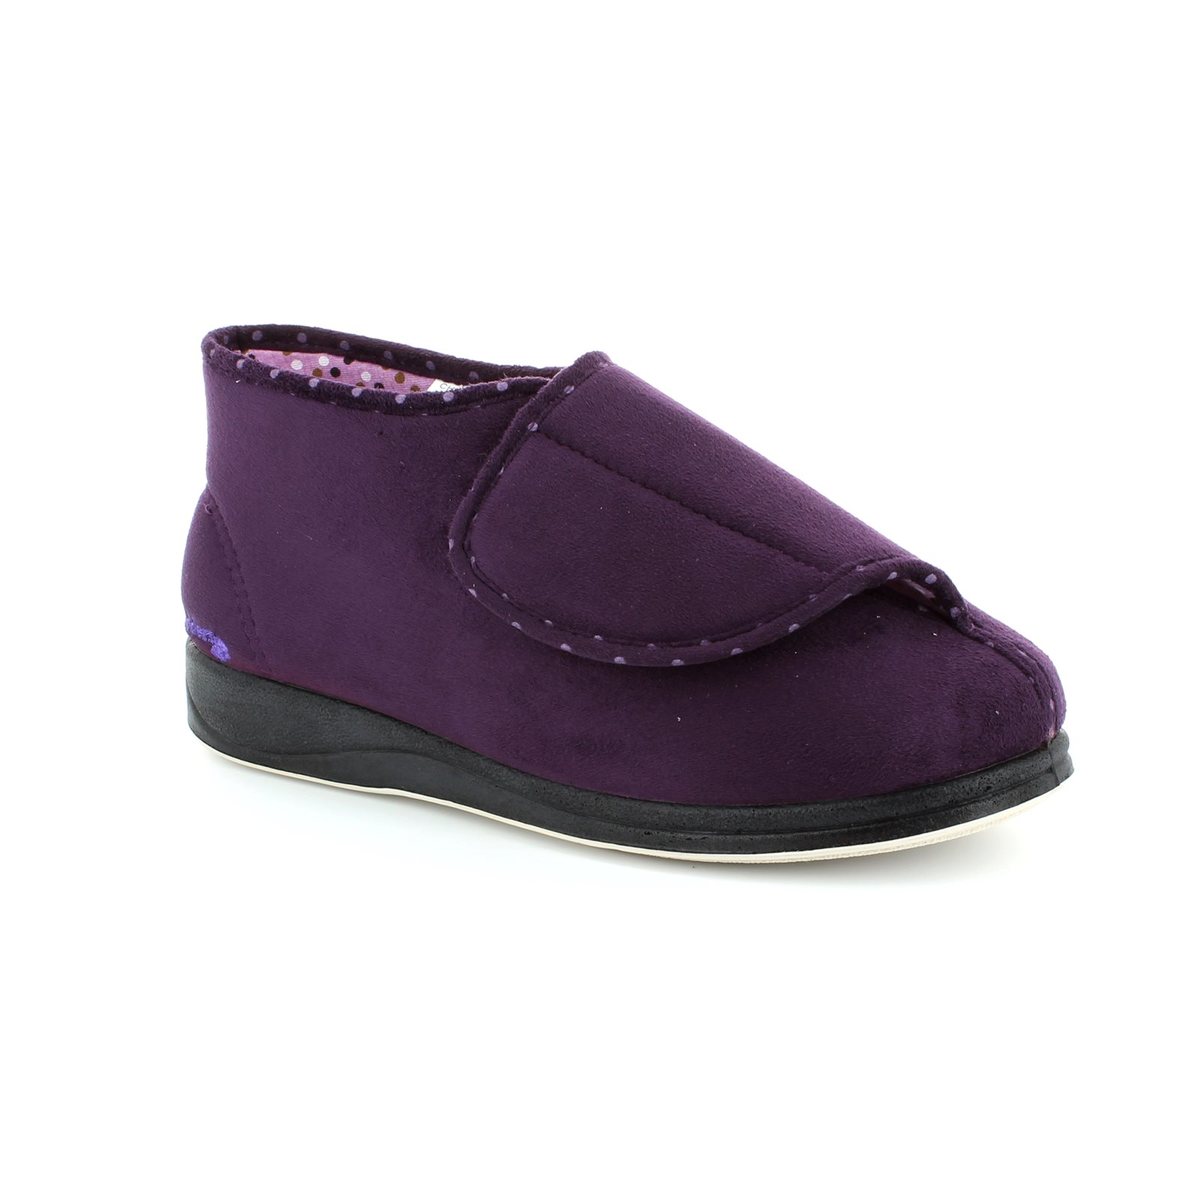 Padders Cherish Purple Womens slippers 449-95 in a Plain Microsuede in Size 5